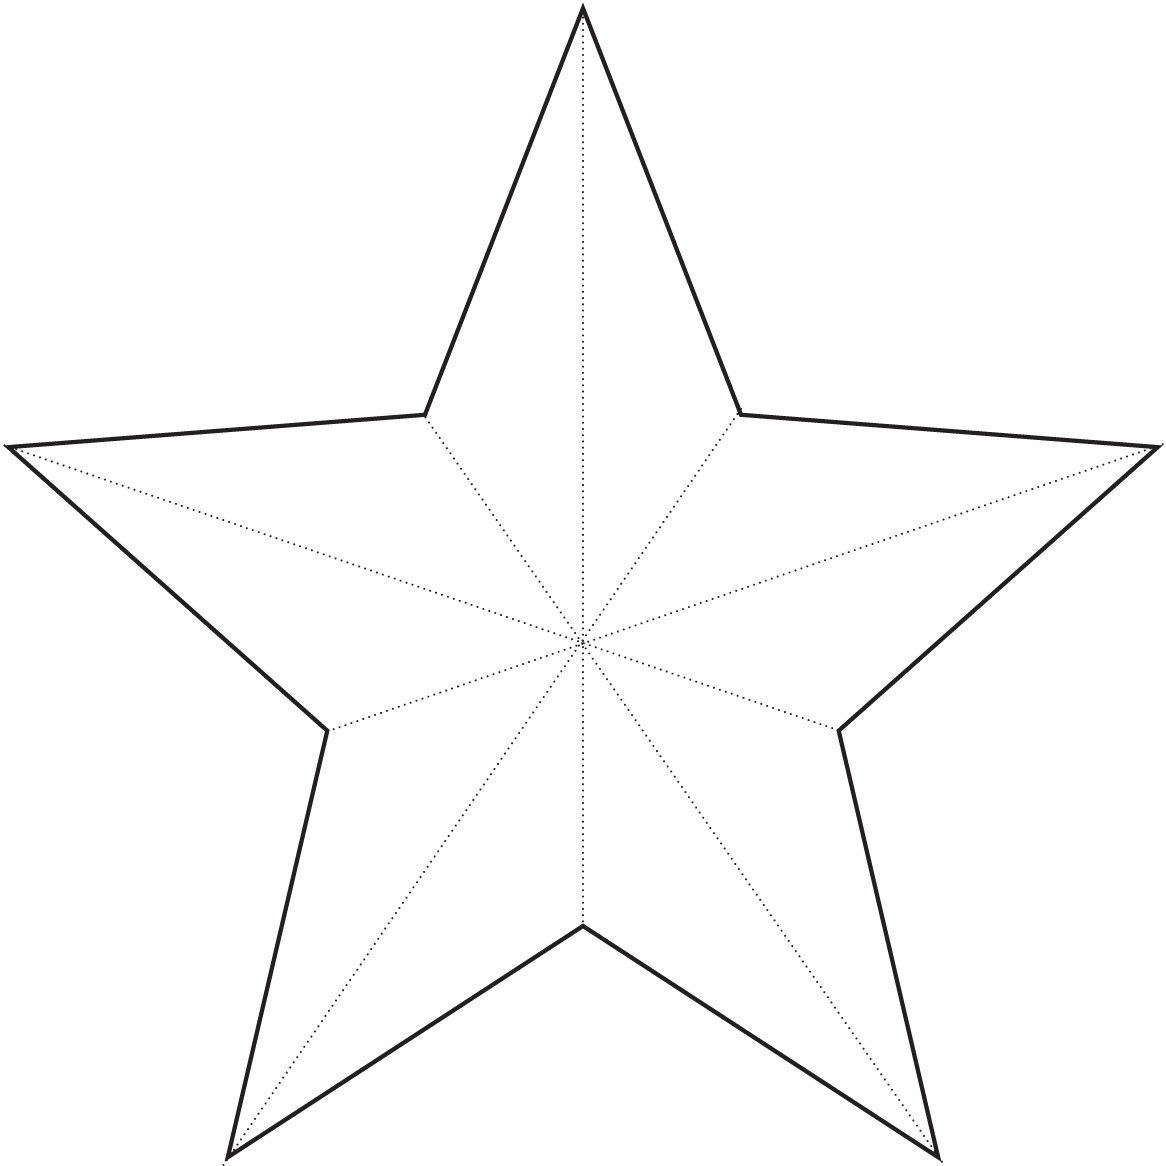 Star template